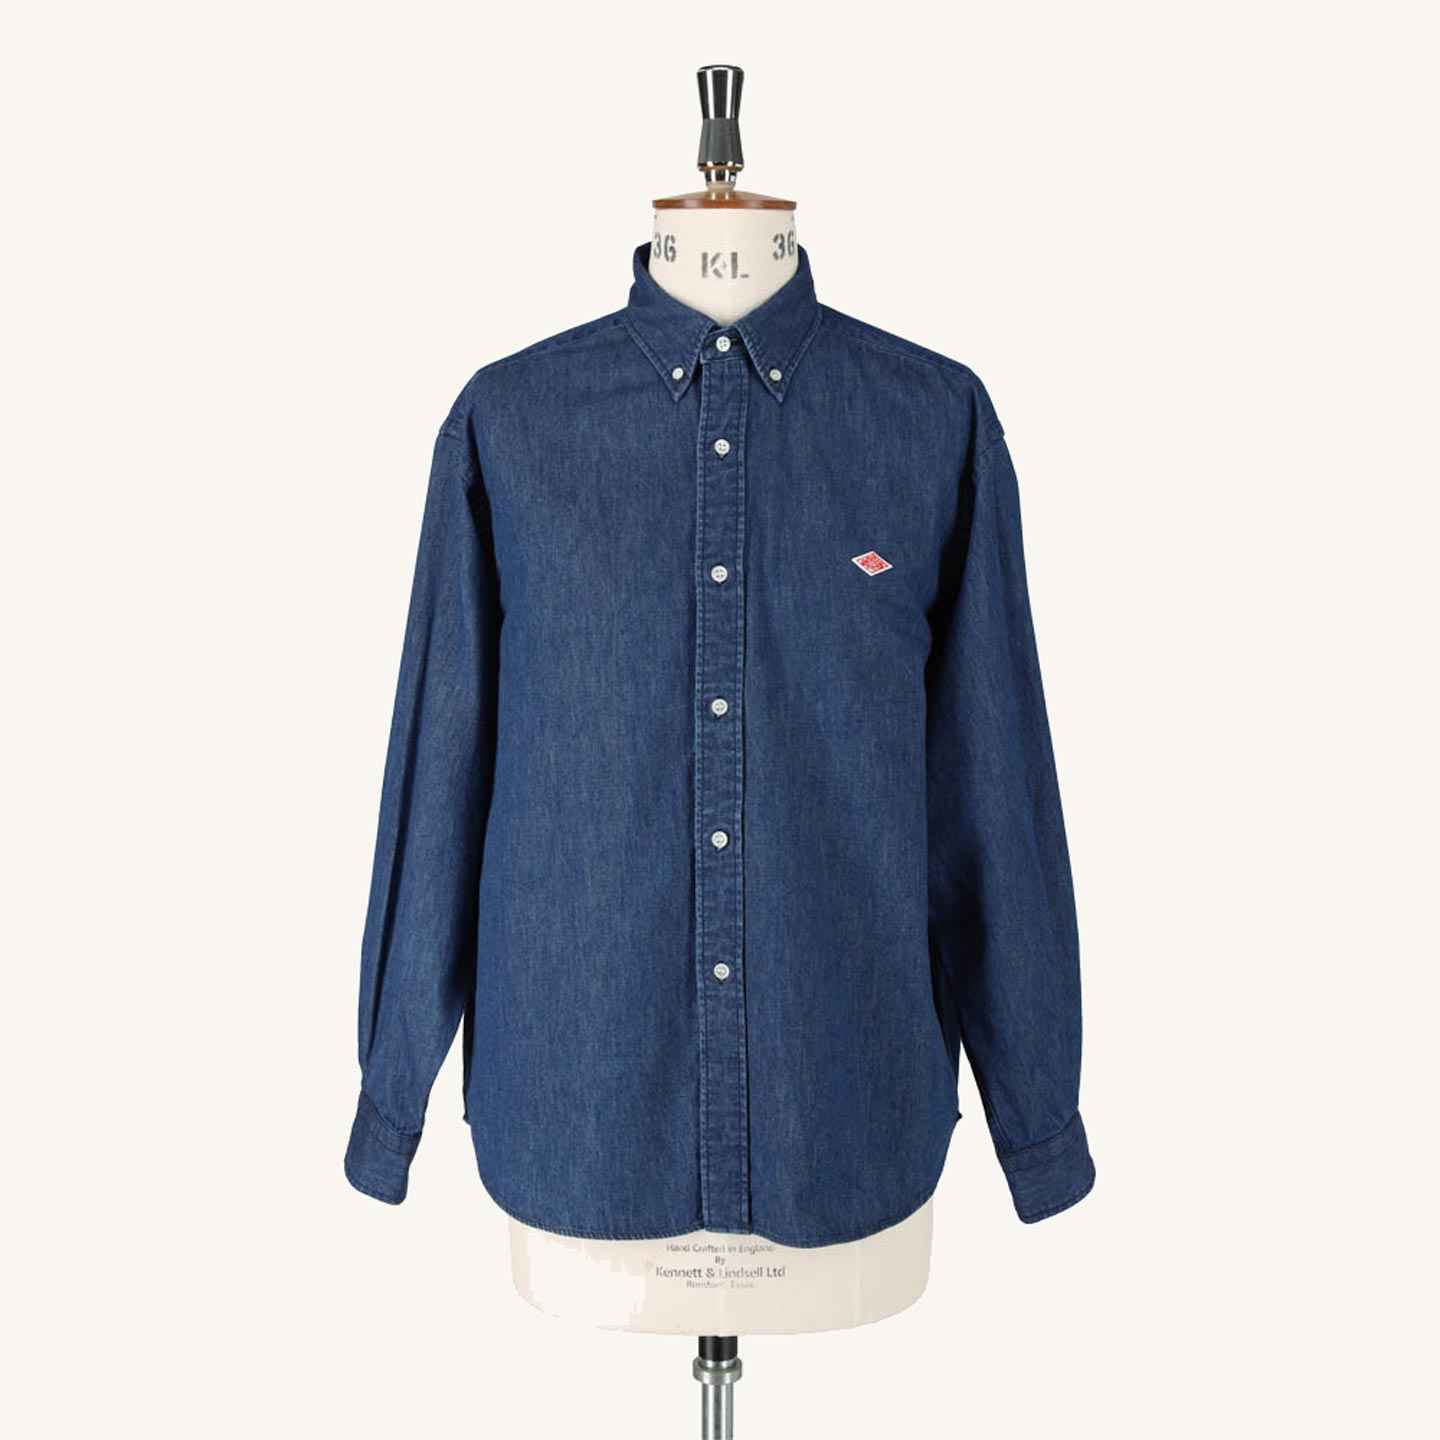 Oversized shirt in 100% cotton Japanese denim